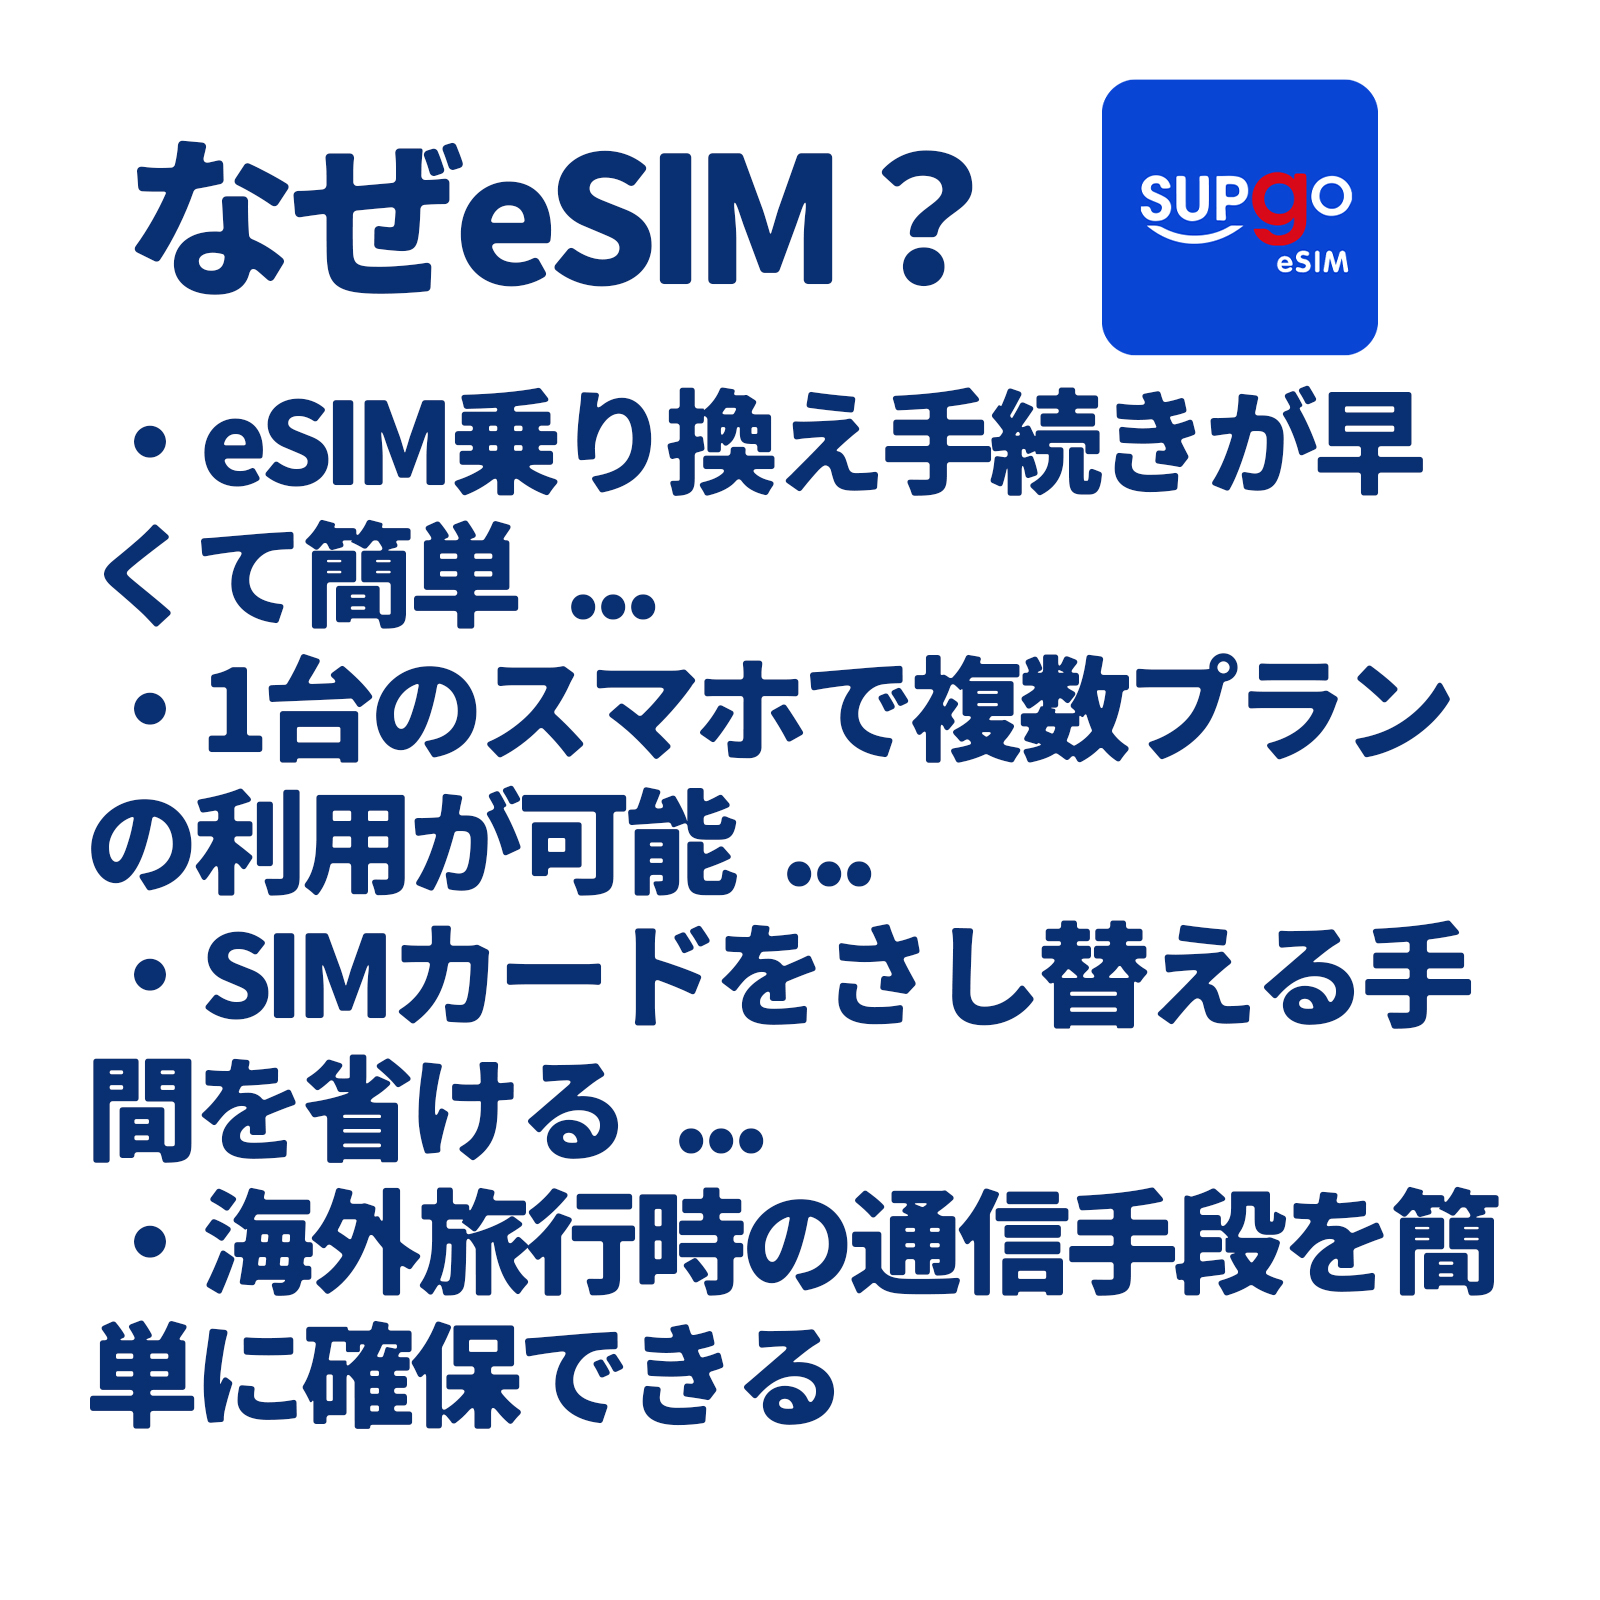 eSIM ジャパン 日本 JAPAN NIPPON 3日間 5日間 7日間 10日間 15日間 20日間 30日間 500MB 1GB 2GB 3GB simカード 一時帰国 留学 短期 出張